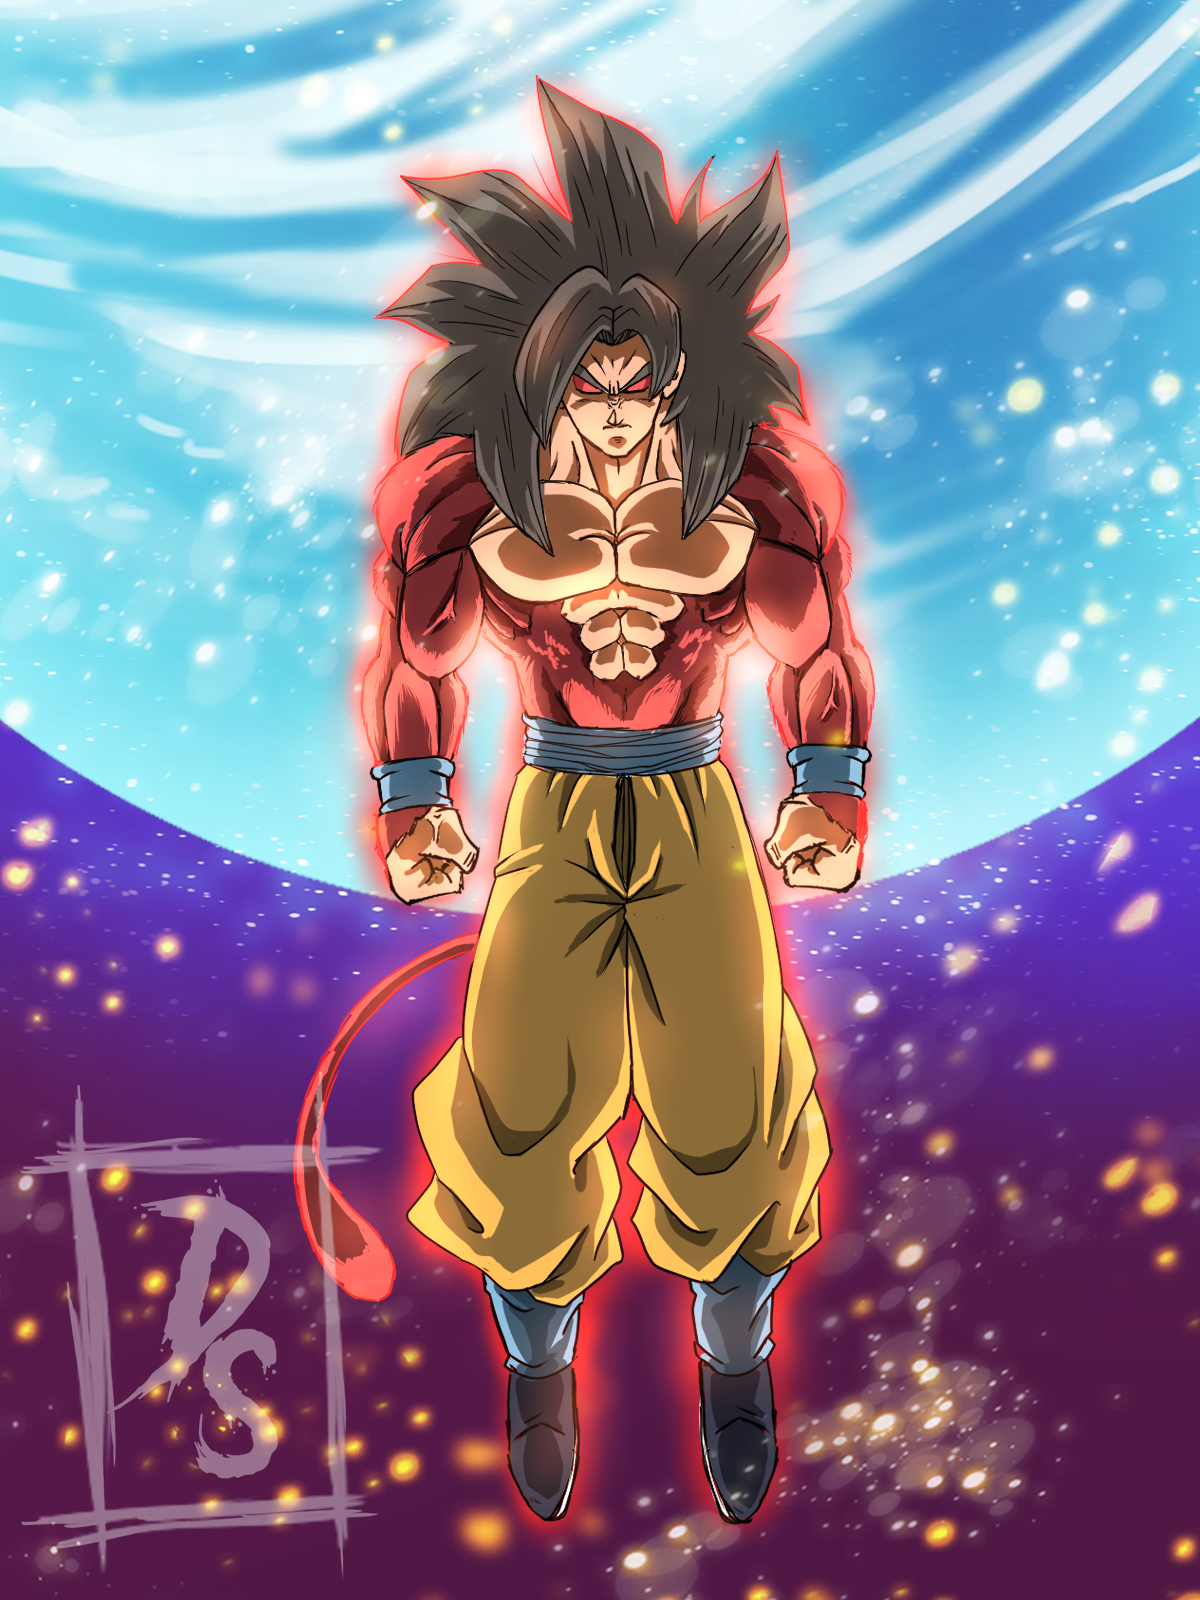 Dragon ball GT : Goku vs Baby by DaekarSenpai on DeviantArt